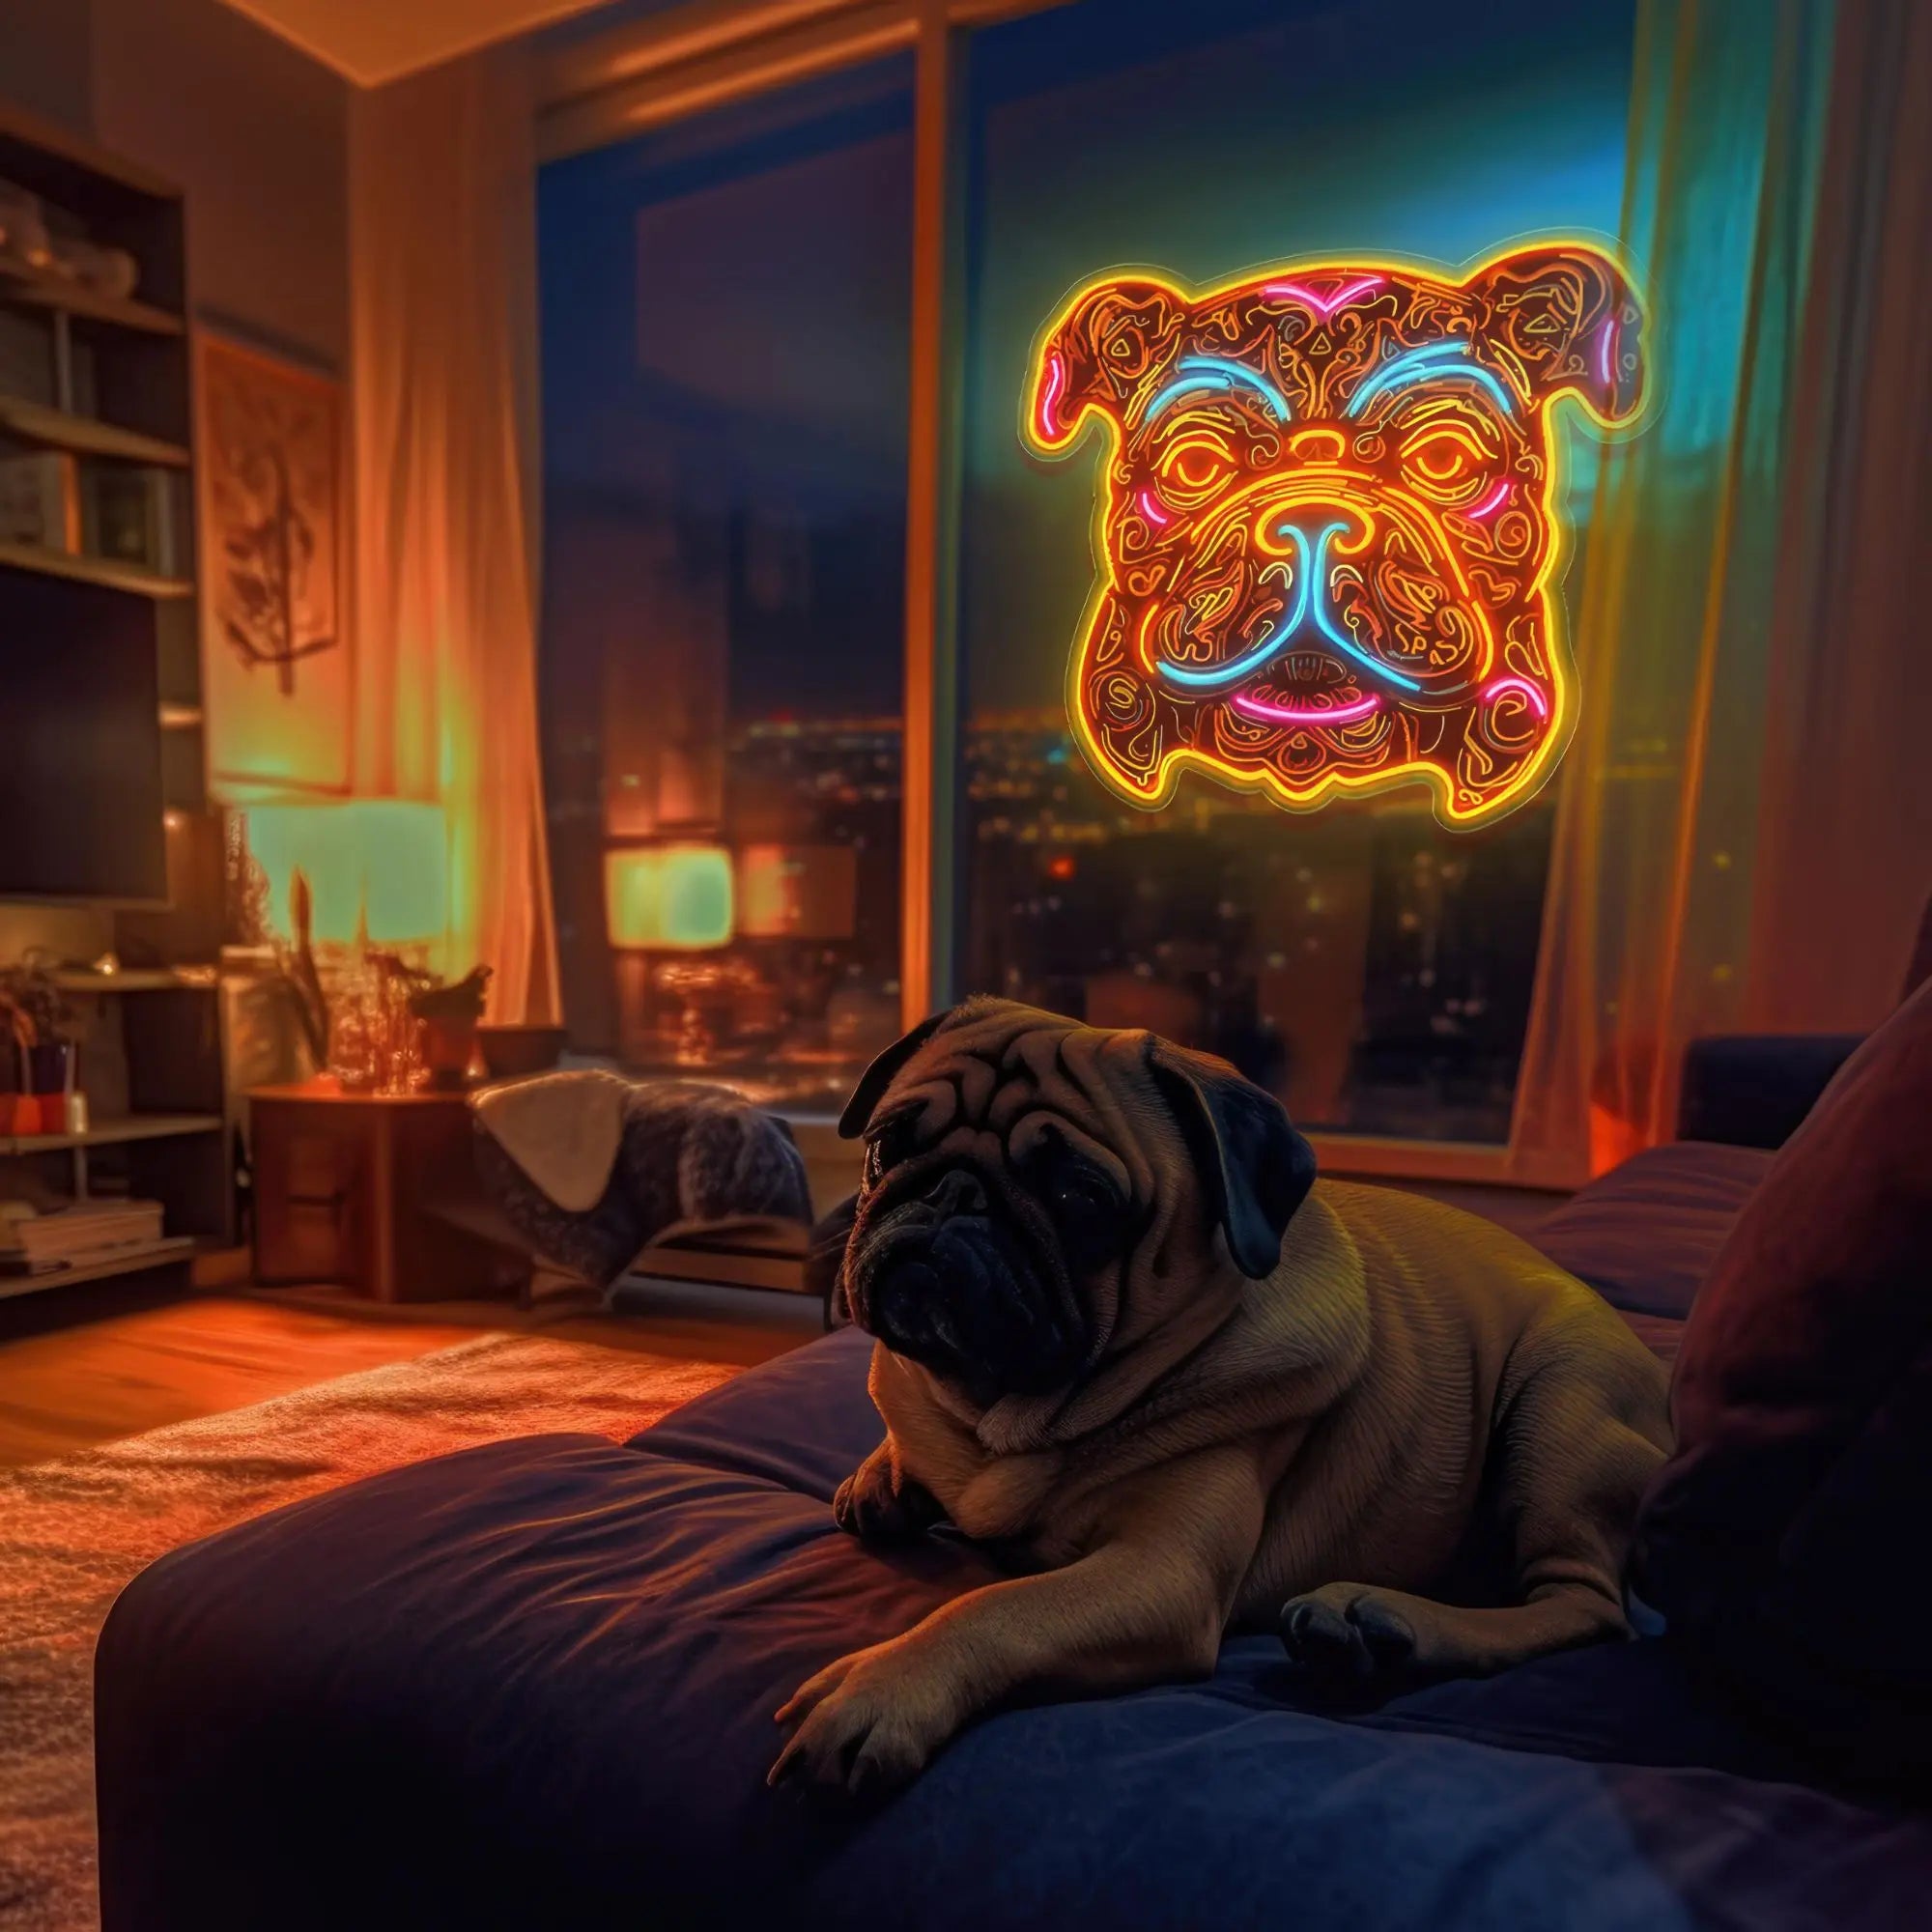 Bulldog LED Sign